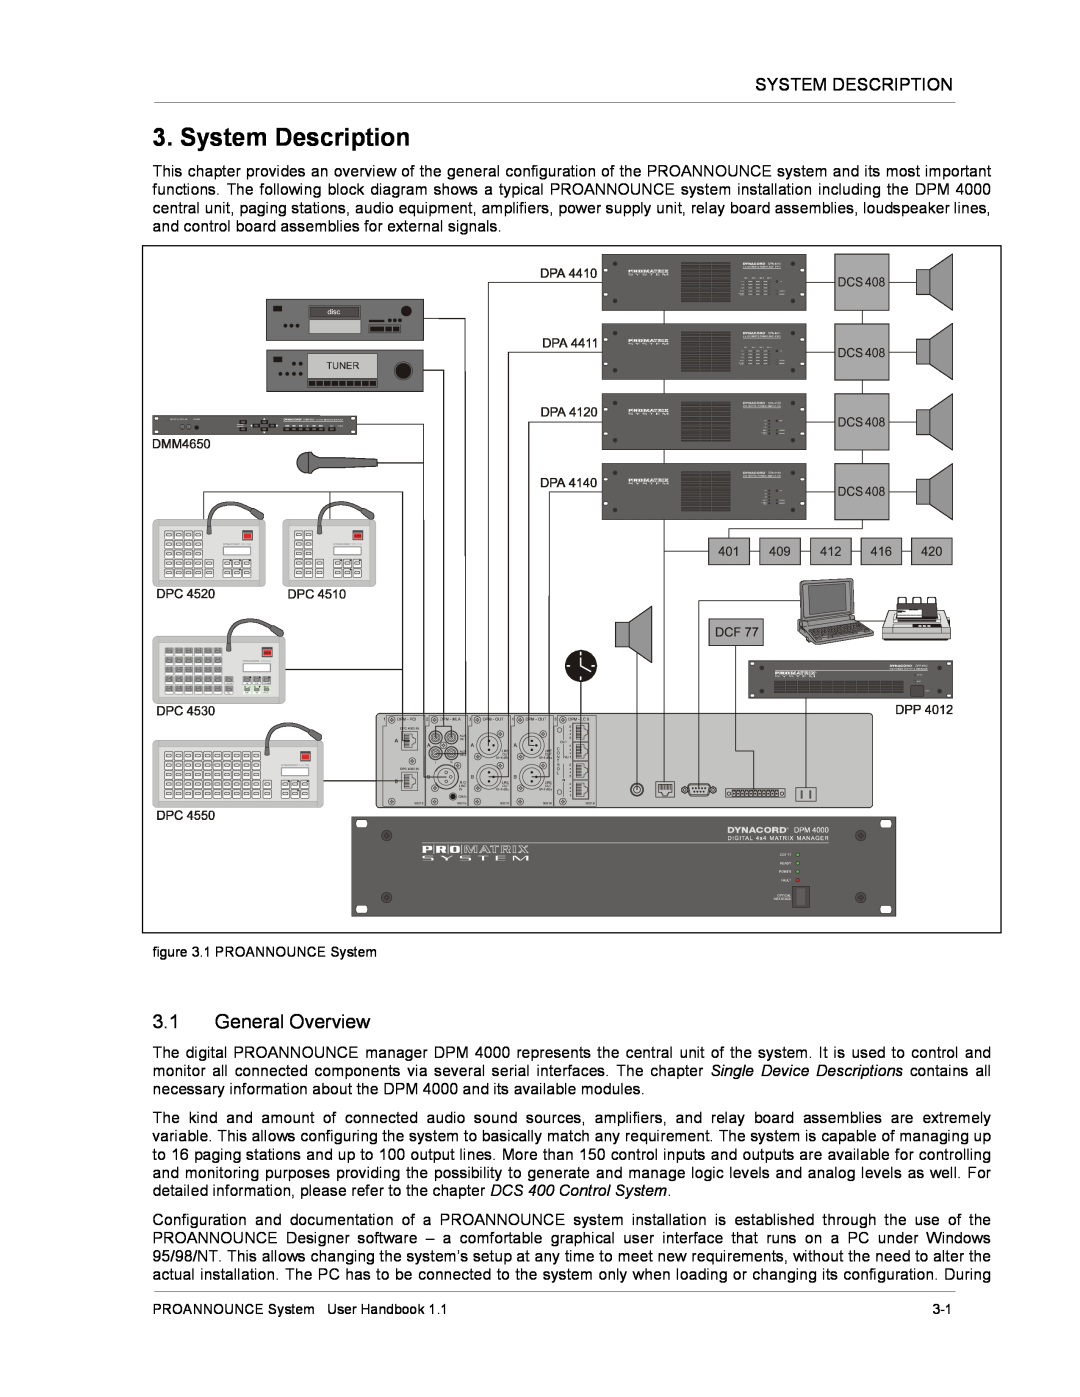 Dynacord DPM 4000 manual System Description, 3.1General Overview 